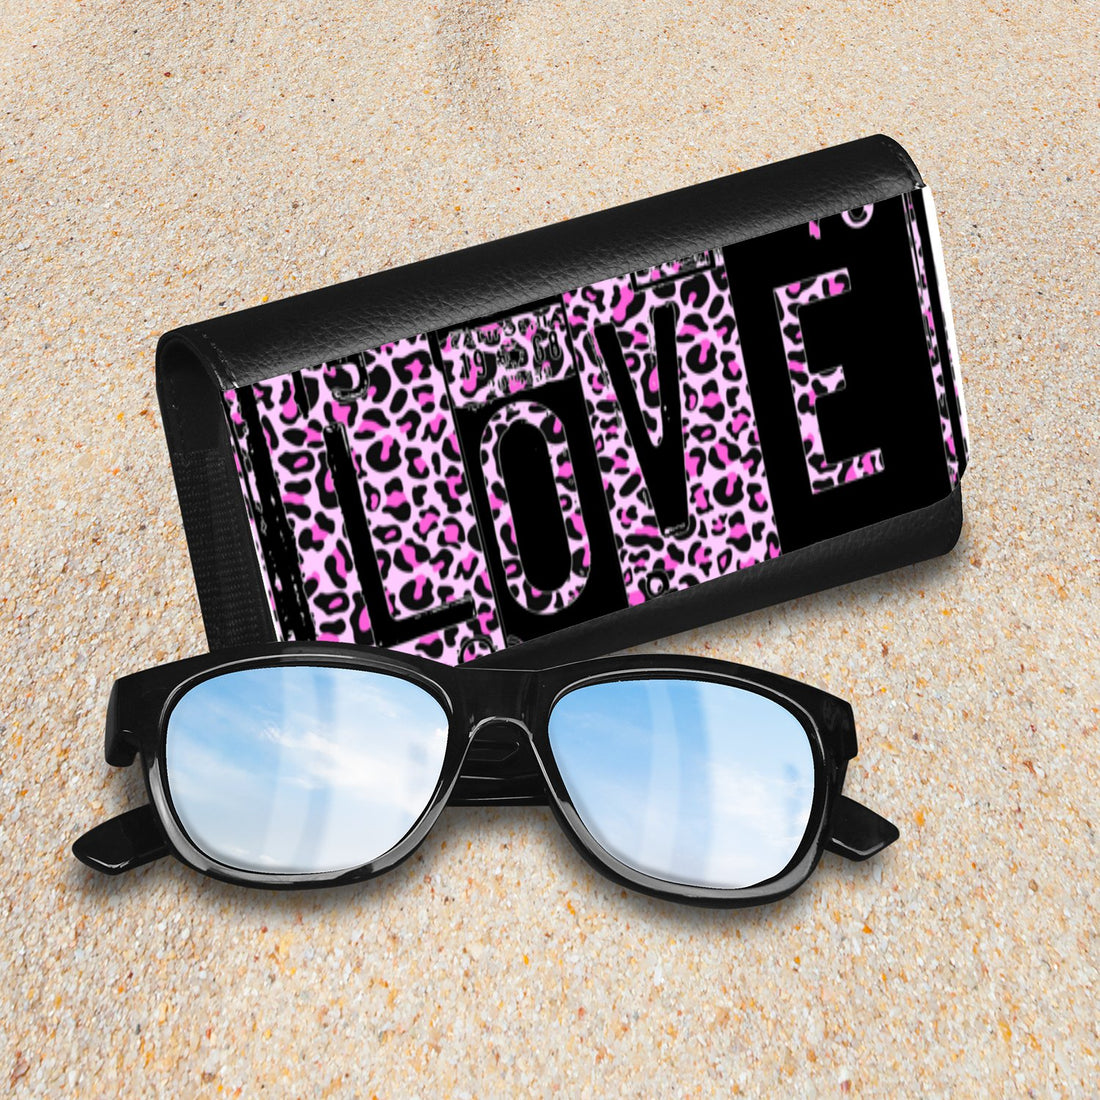 LOVE Sunglasses Case - Positively Sassy - LOVE Sunglasses Case